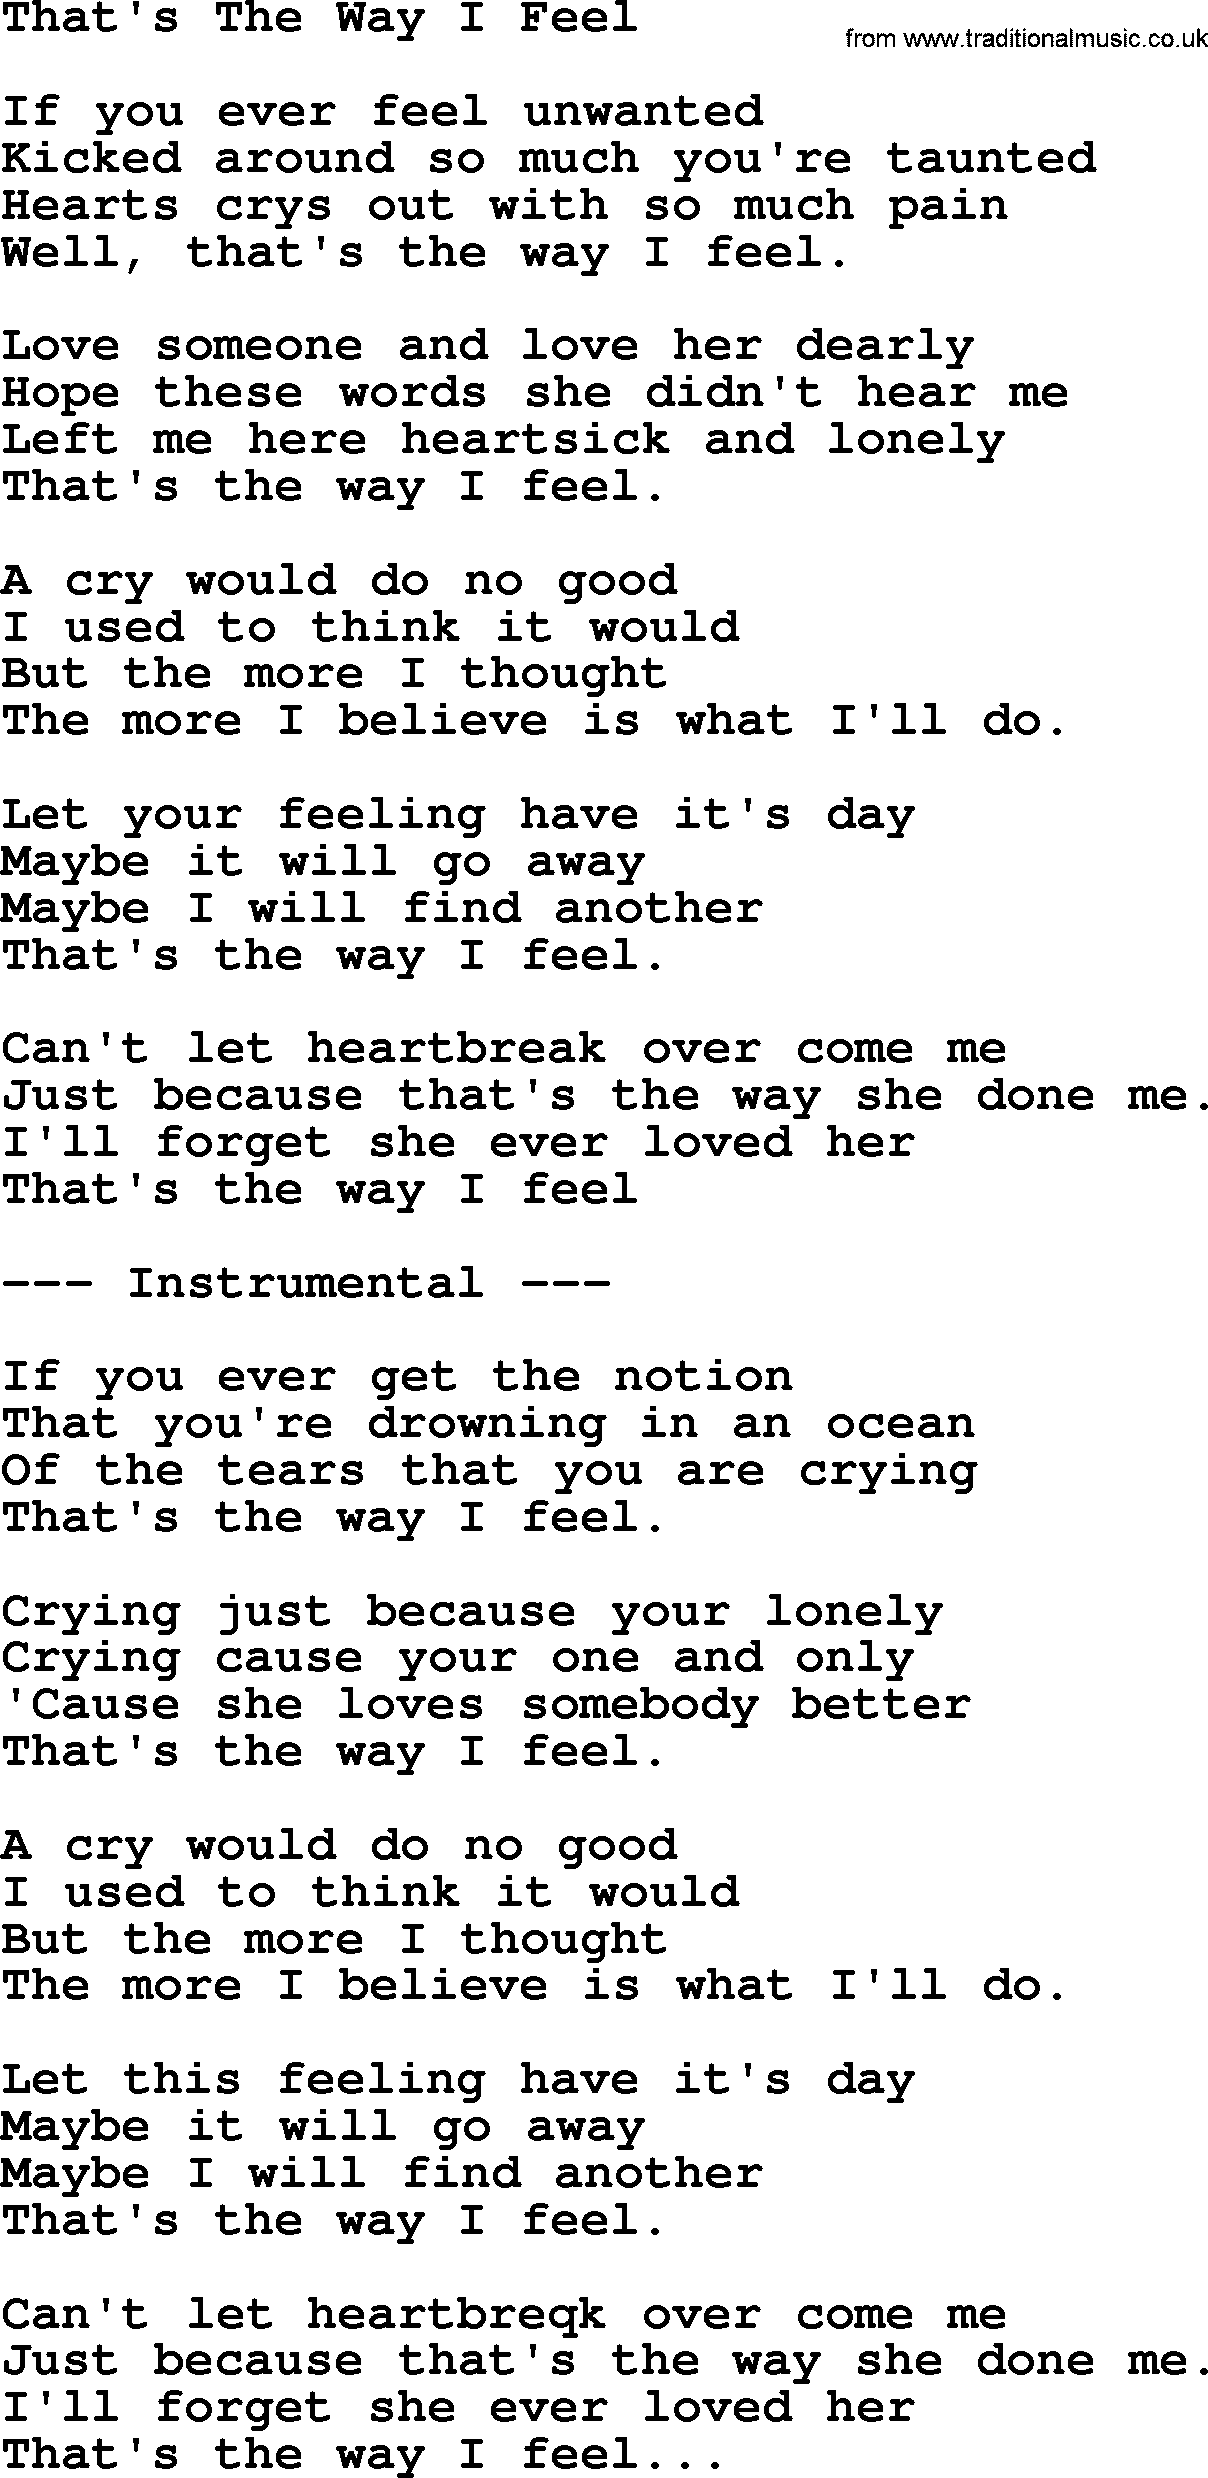 George Jones song: That's The Way I Feel, lyrics